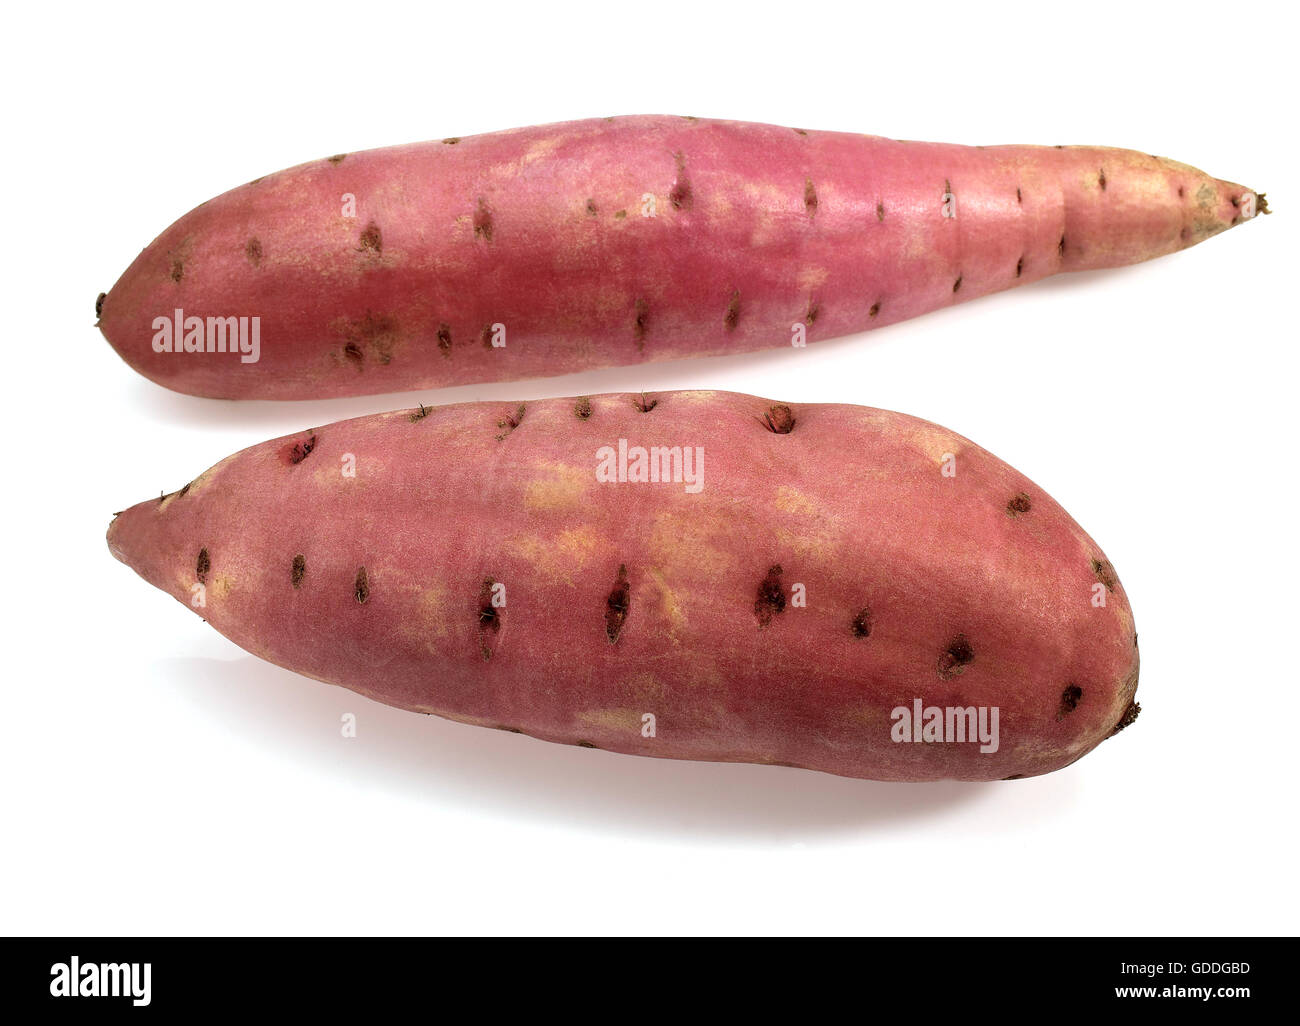 Potatoe Ipomoea batatas stock photo. Image of potato - 154975592